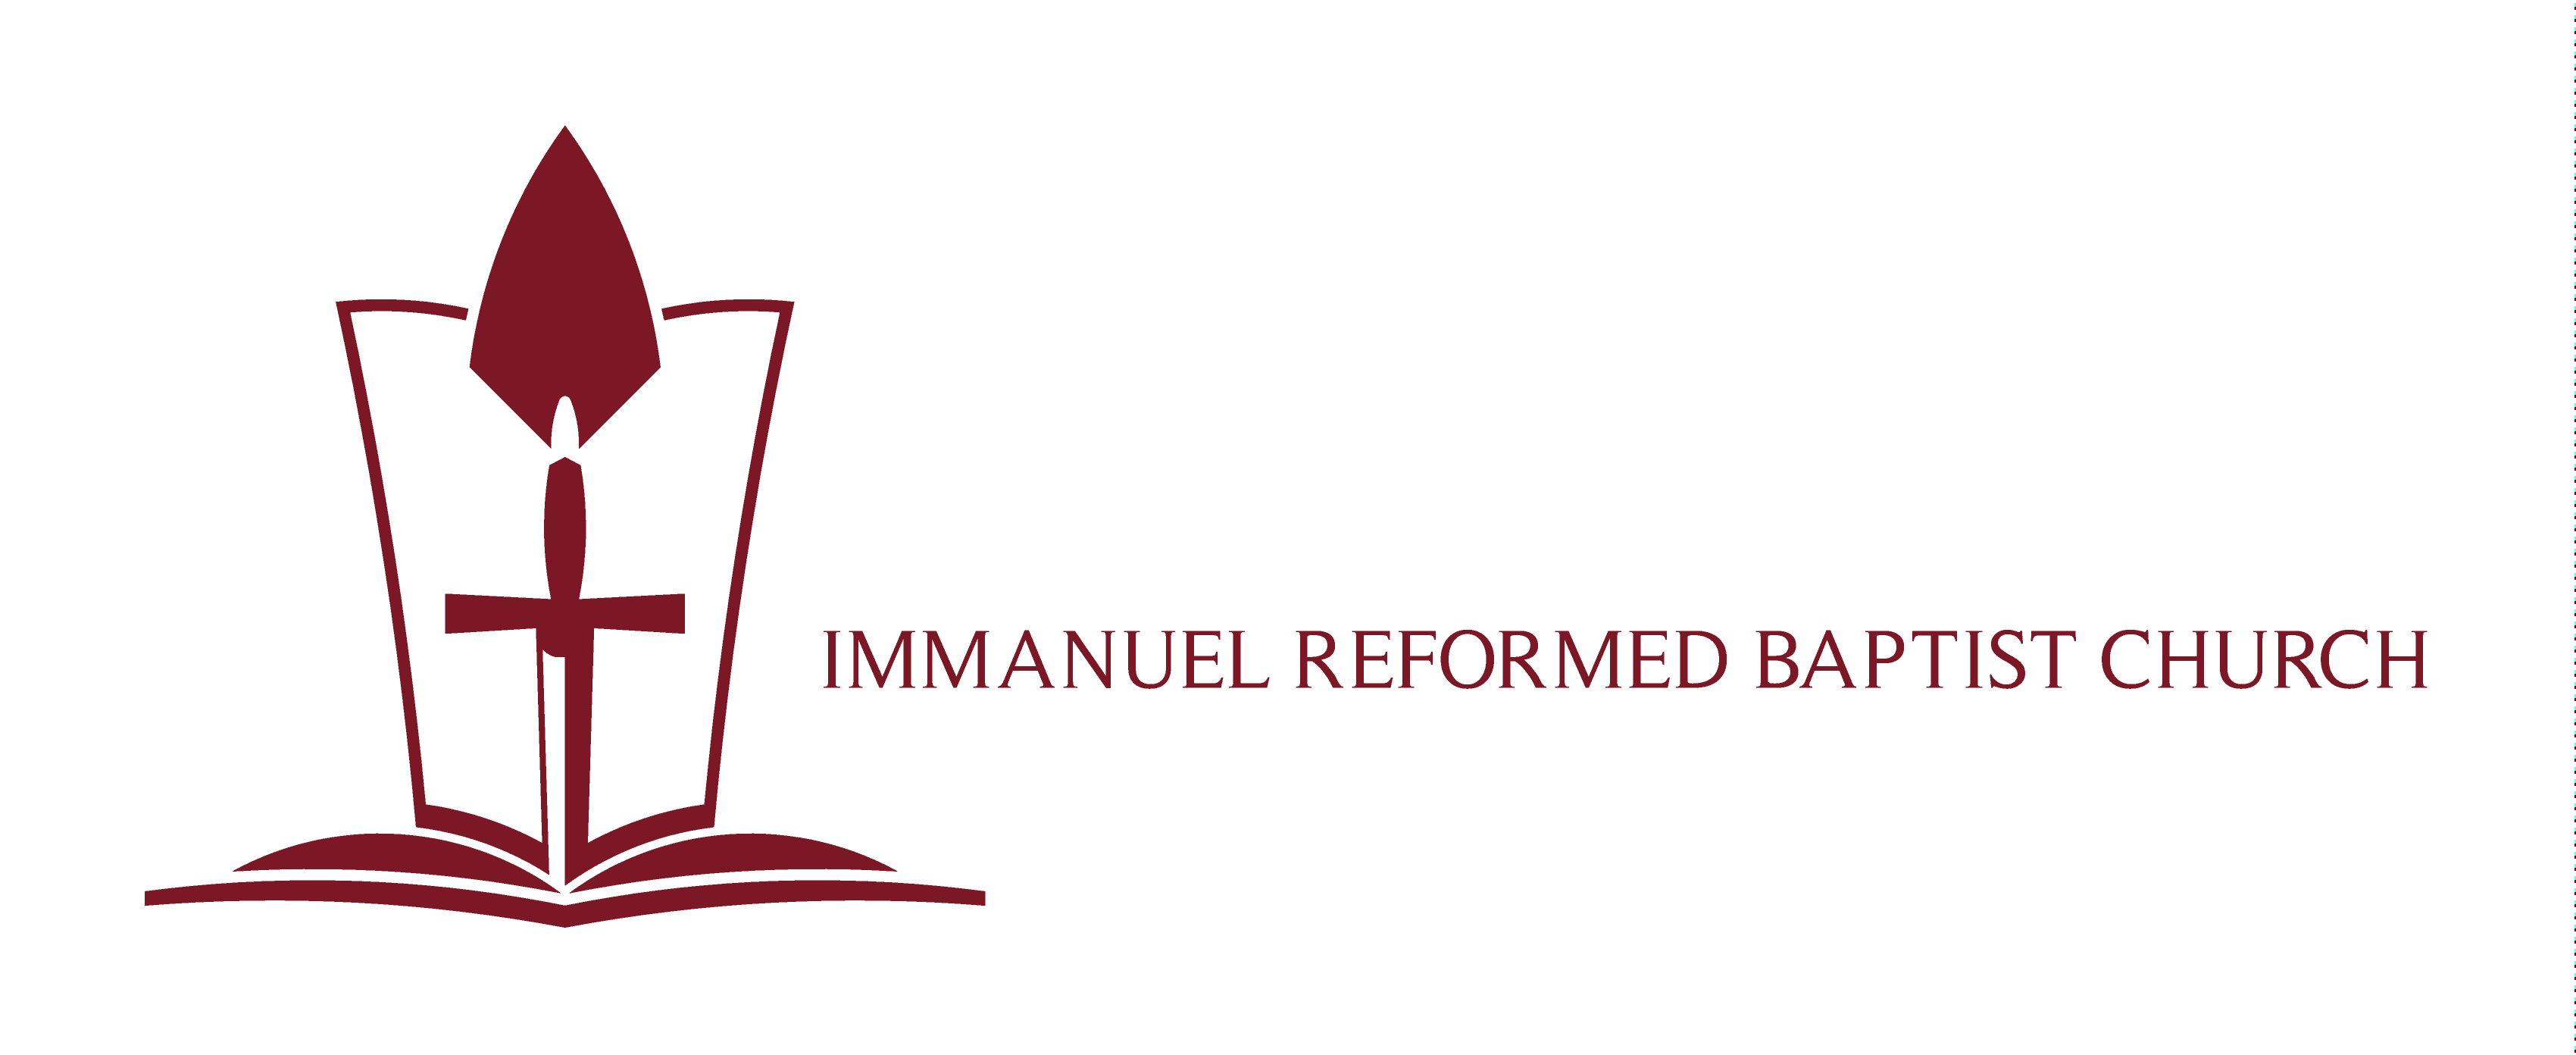 Immanuel Reformed Baptist Church